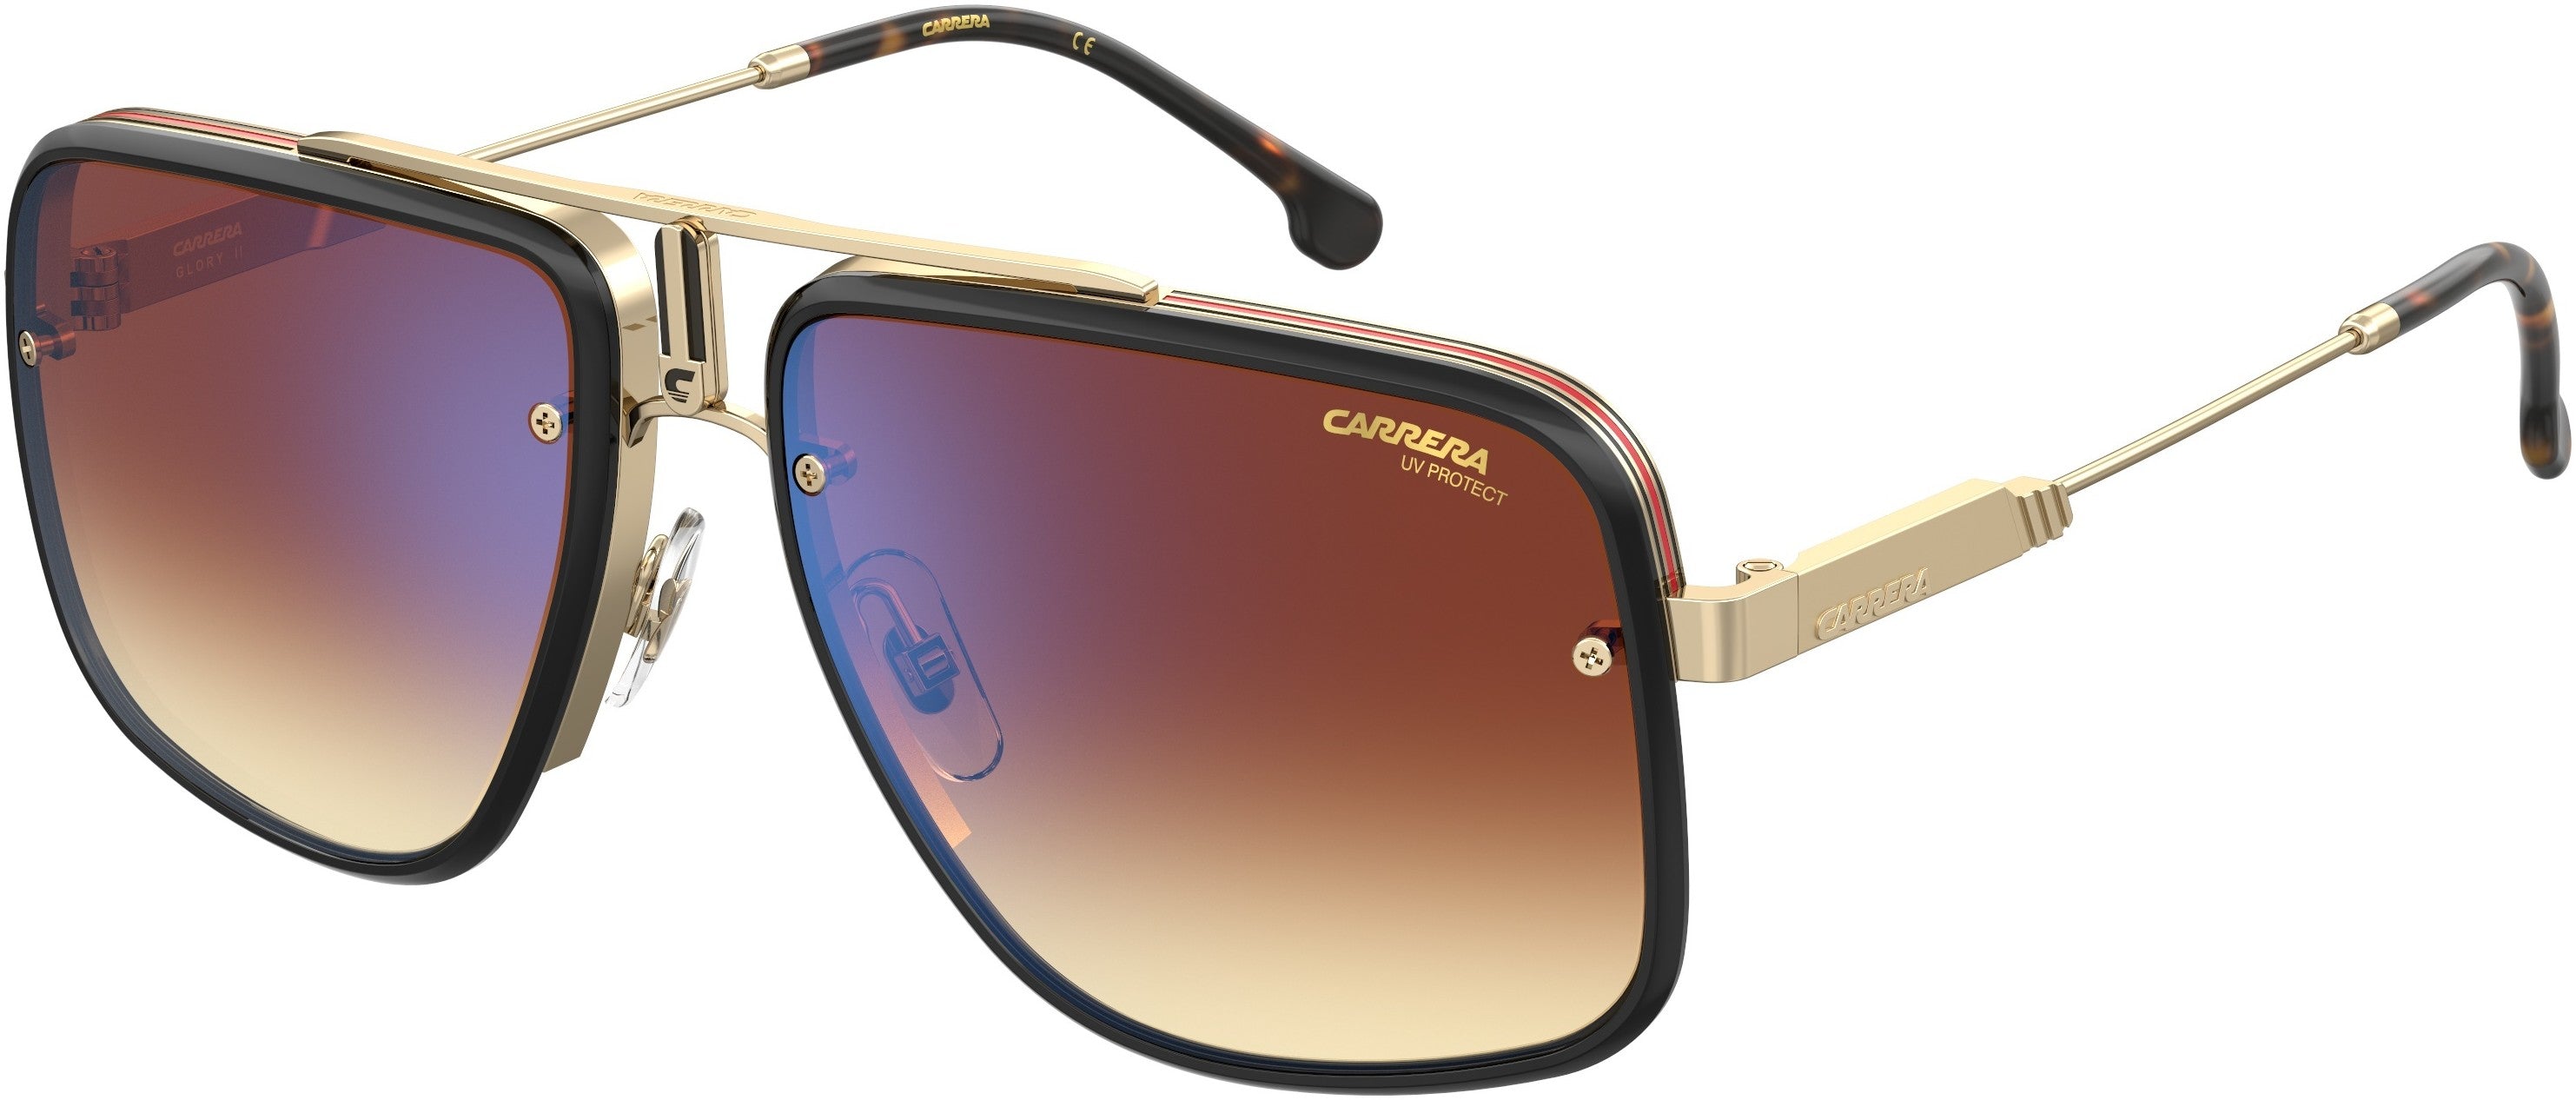  Carrera Glory Ii Rectangular Sunglasses 0J5G-0J5G  Gold (A8 Brown Shaded Blue Mirror)